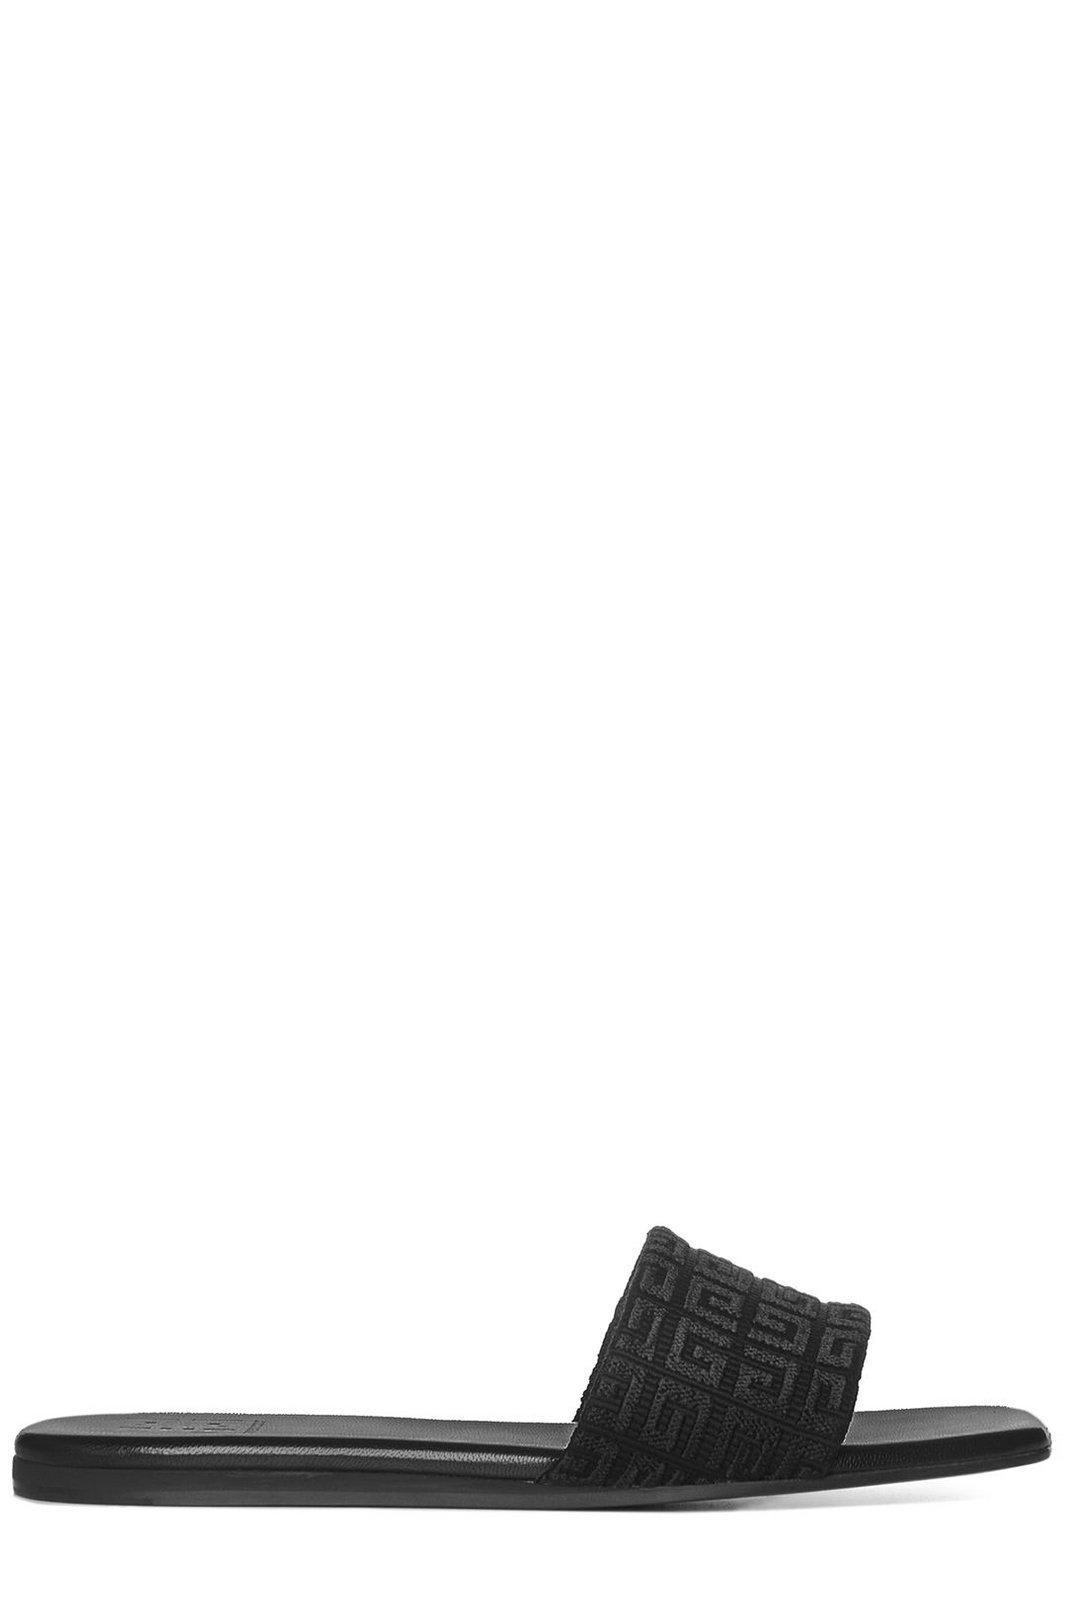 Givenchy 4g Jacquard Open-toe Slides